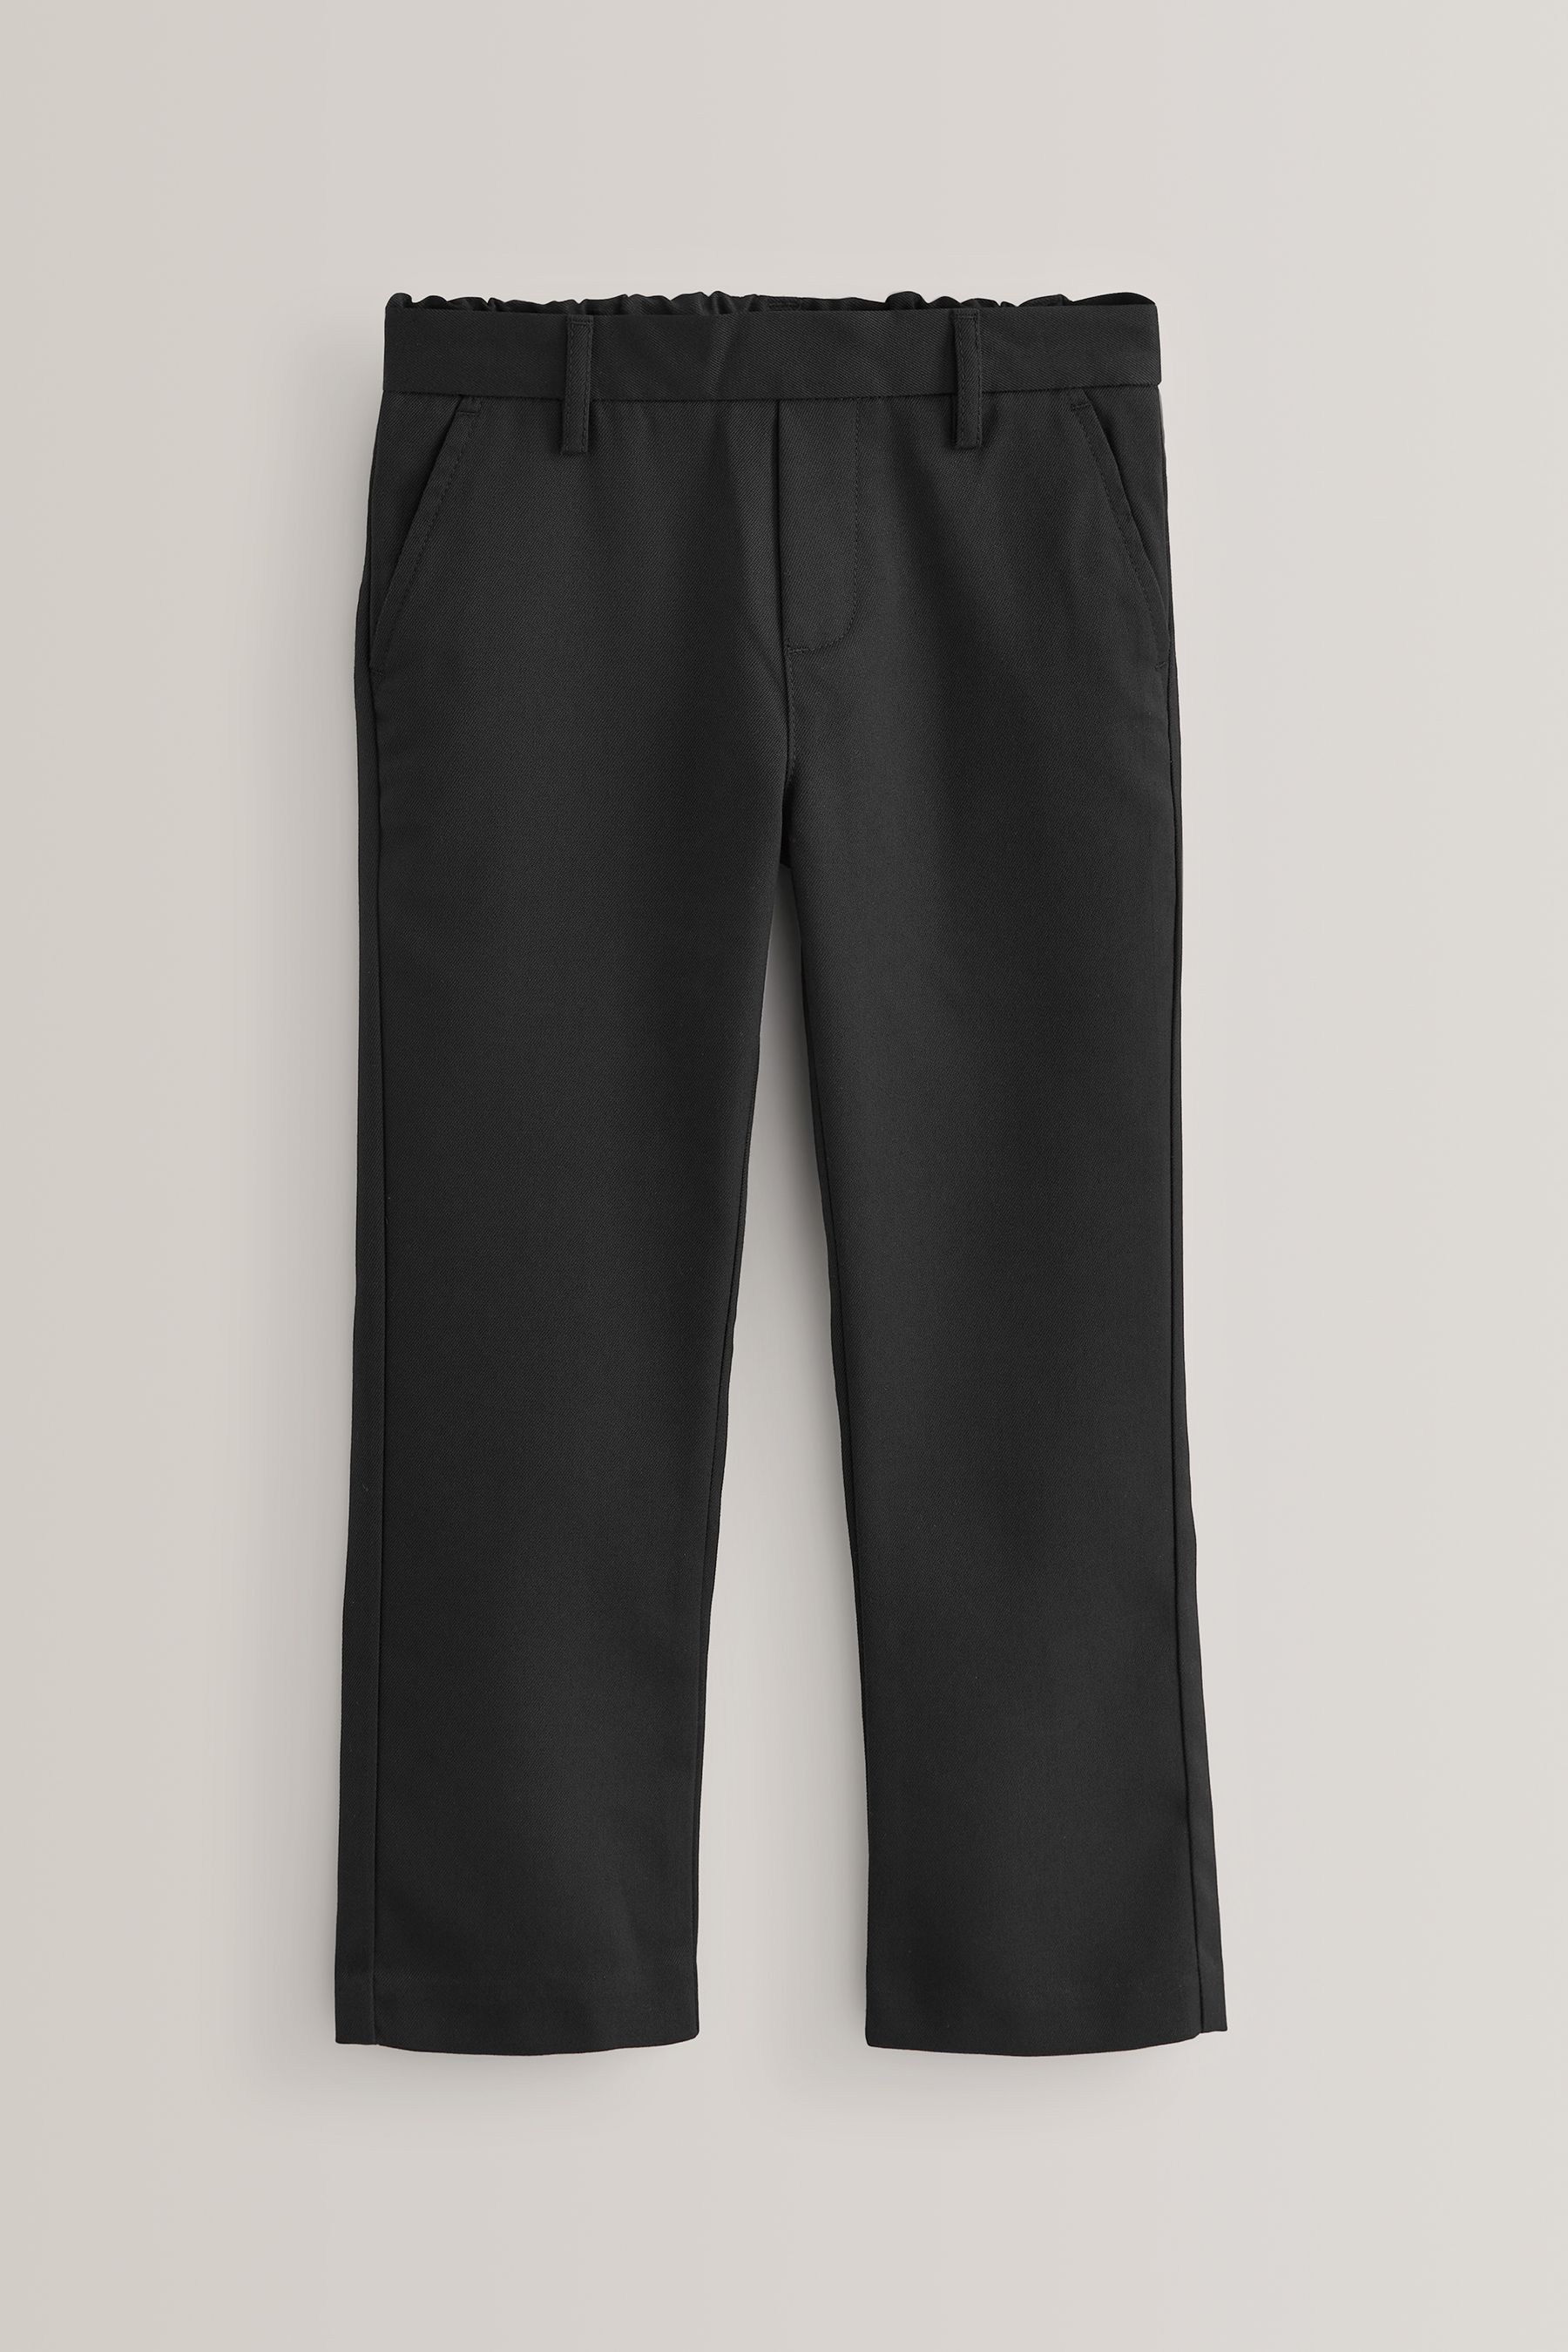 Buy Black Regular Pull-On Waist School Formal Straight Trousers (3 ...